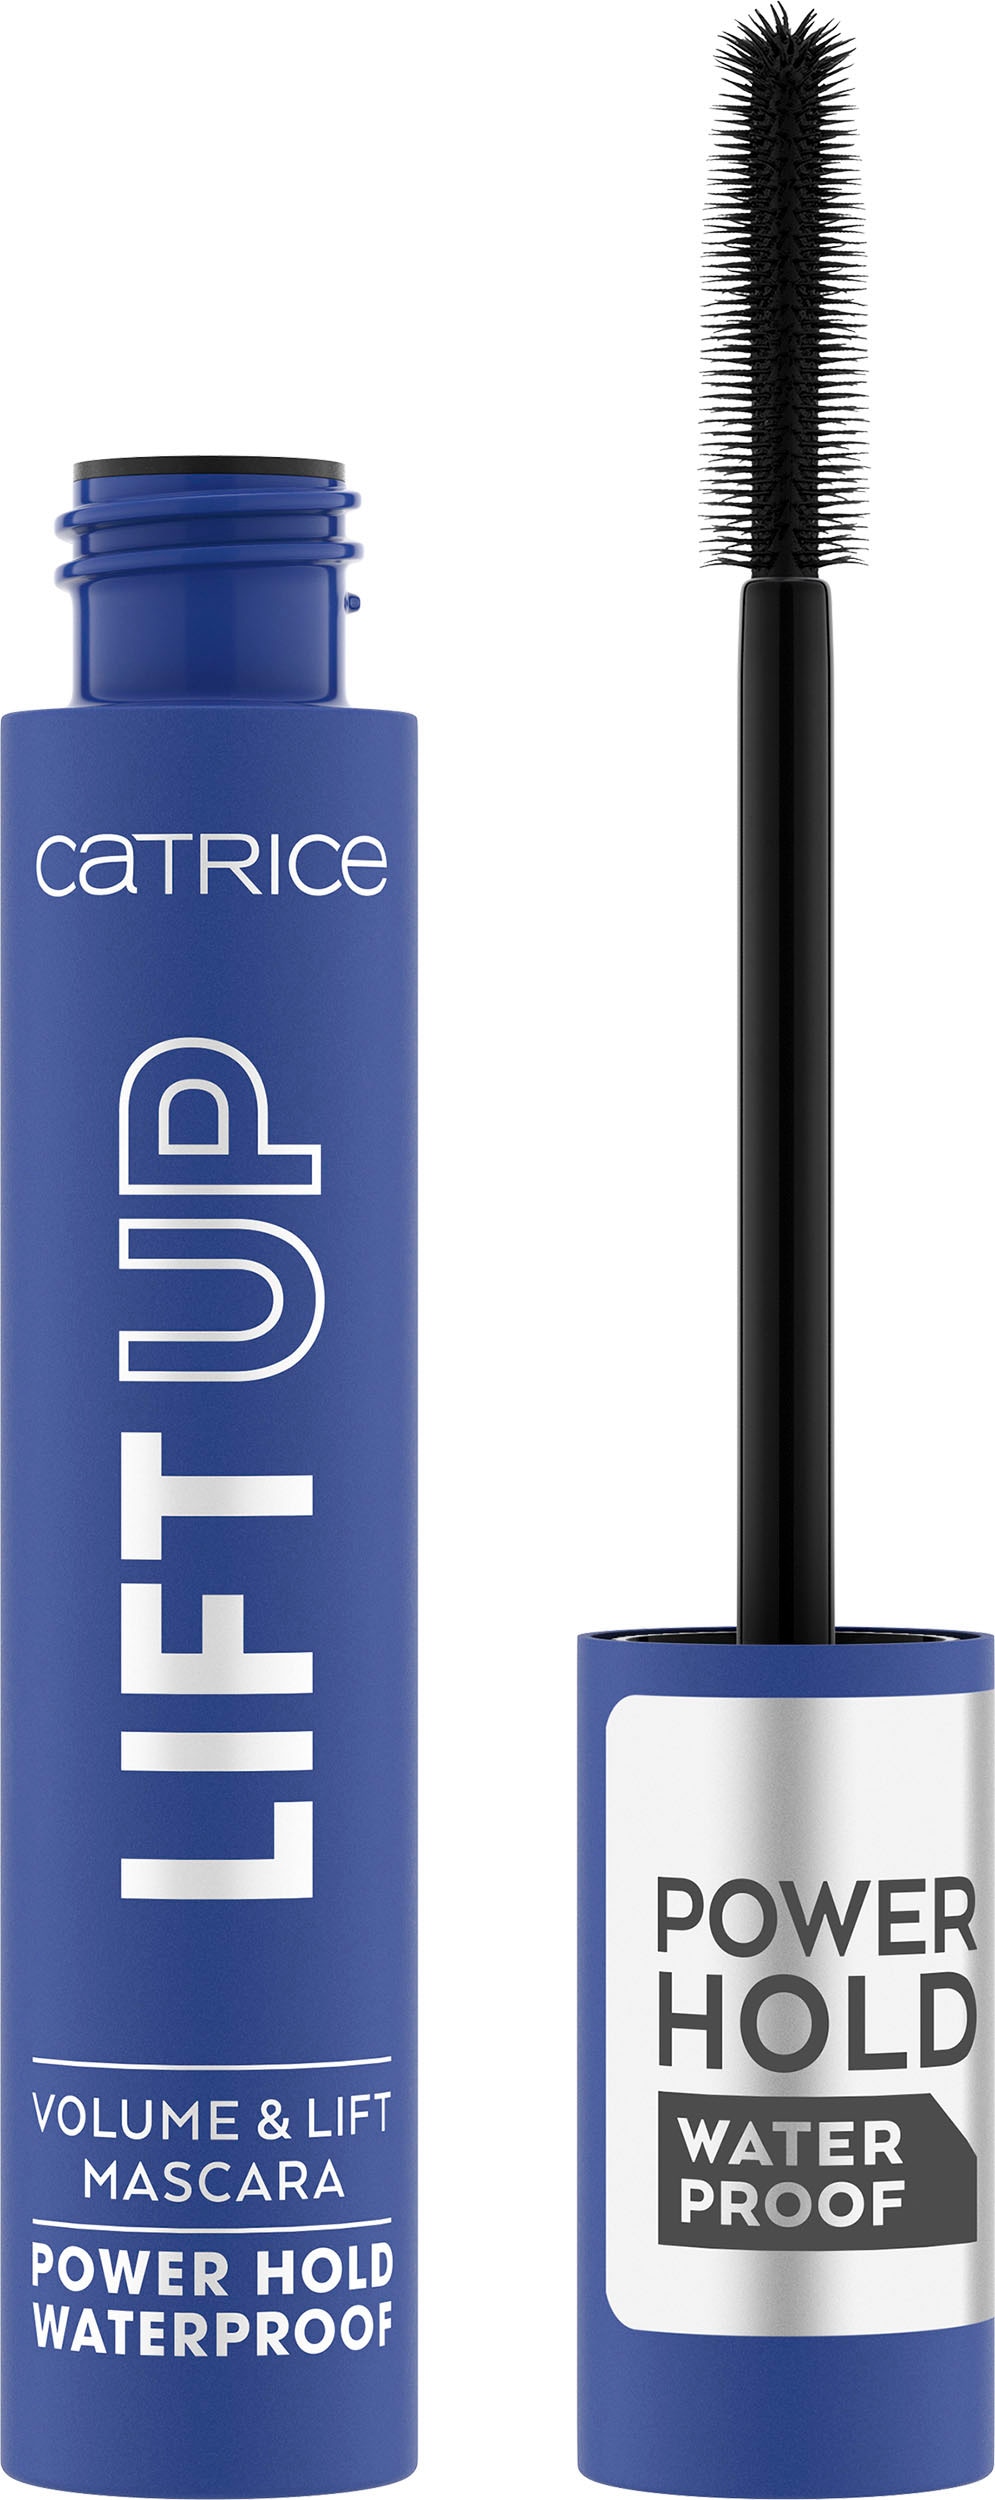 Catrice Mascara »Catrice LIFT UP Volume & Lift Mascara Power Hold Waterproof 010«, (Set, 3 tlg.)